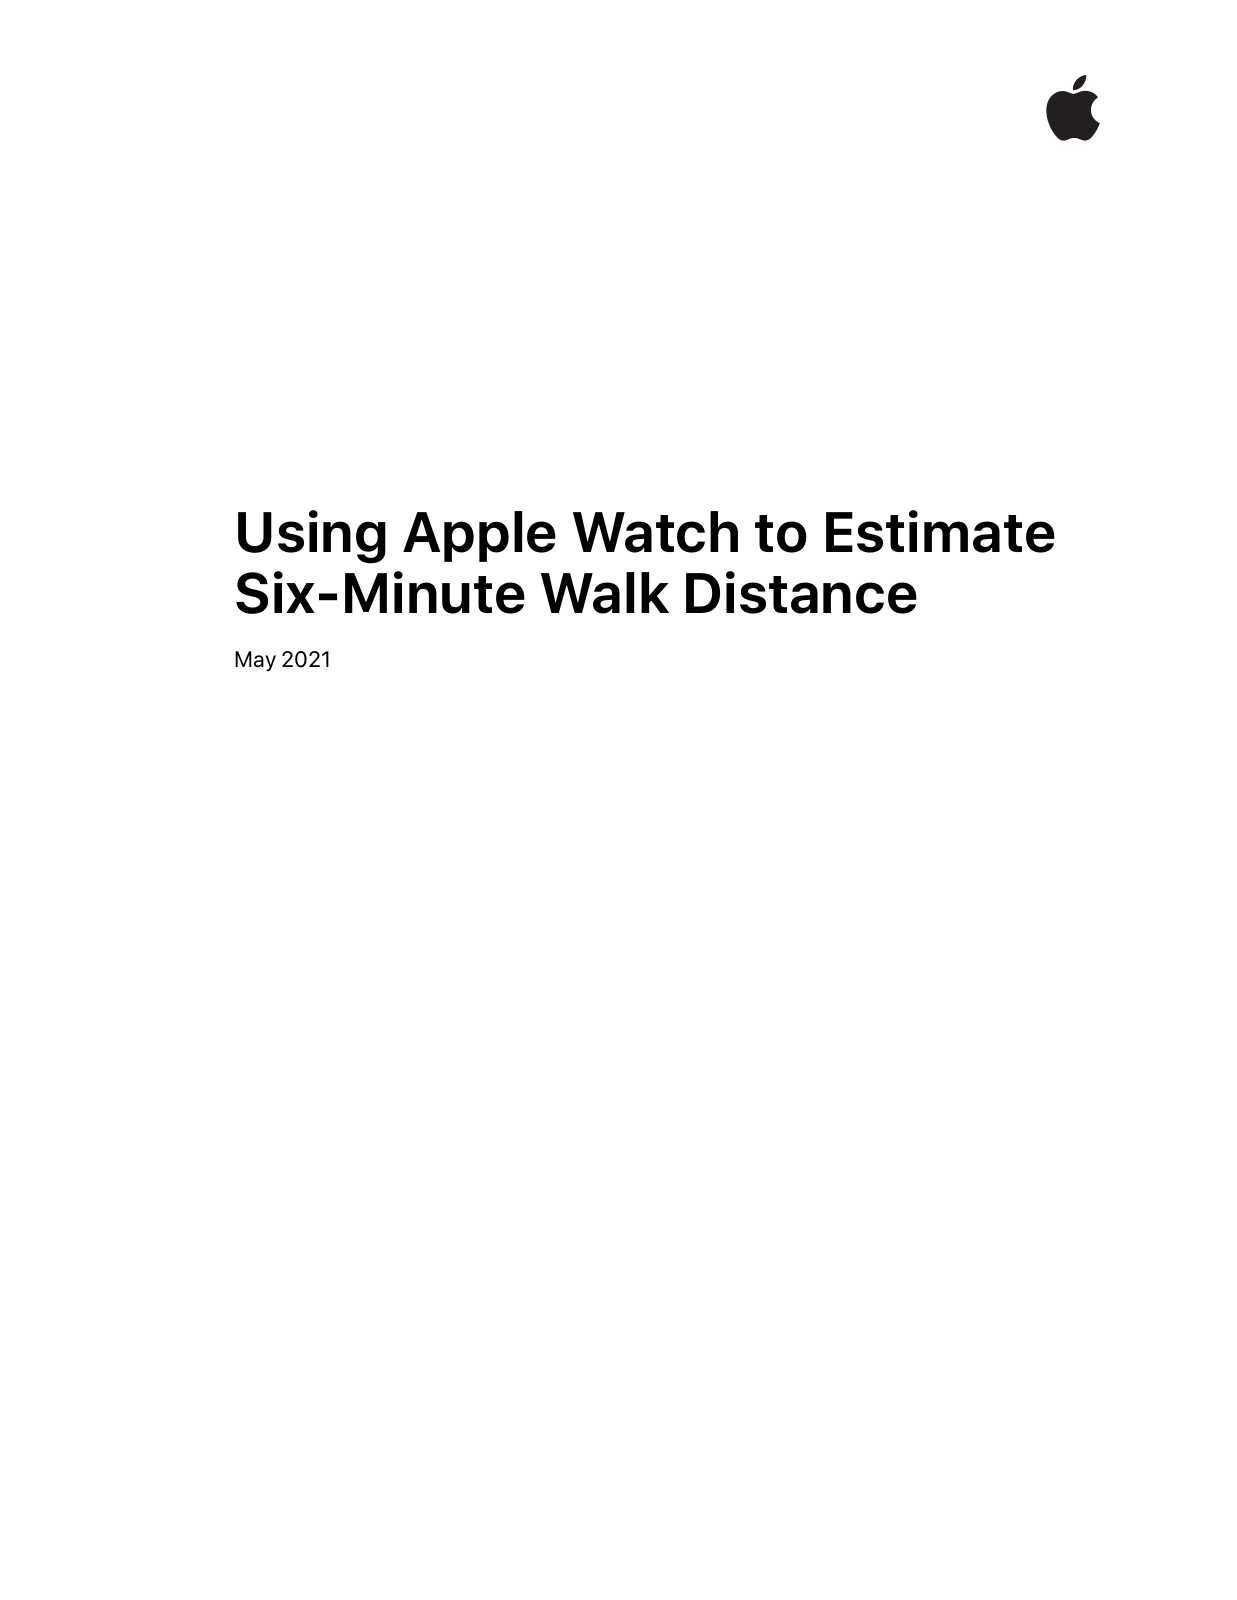 Apple Watch Series 3 User Manual